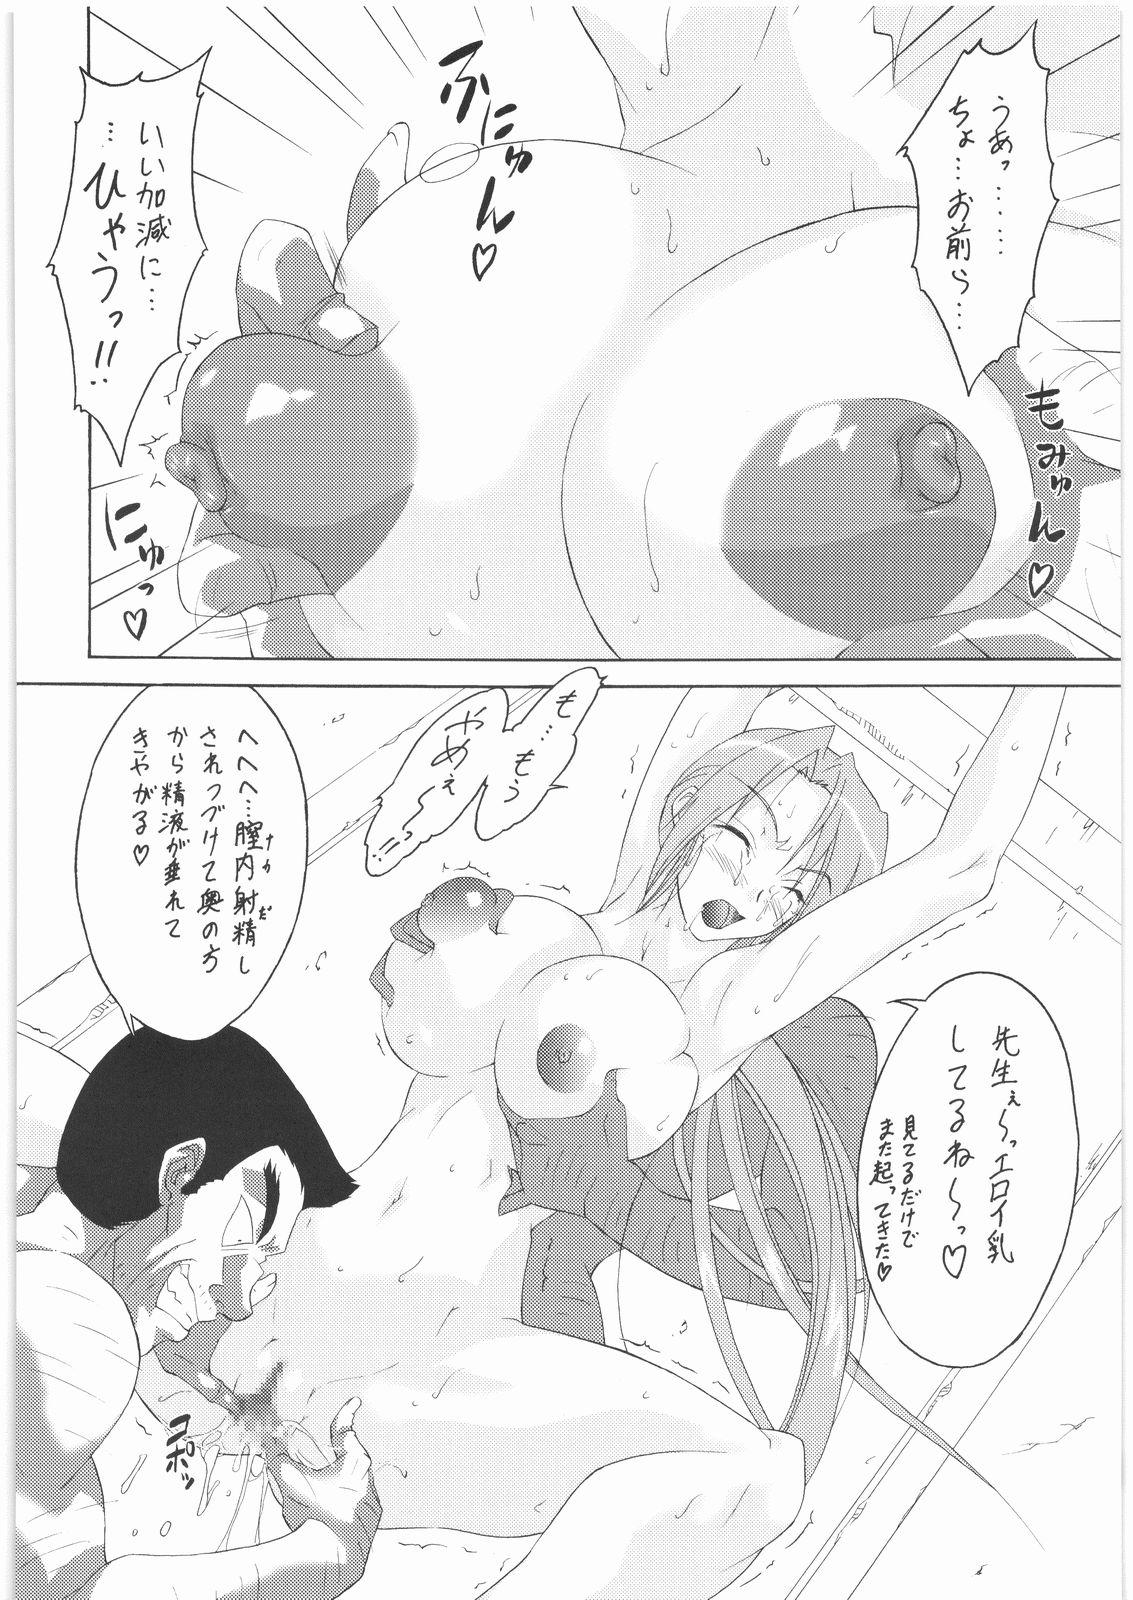 Hole Konata no Maruhi Baito - Lucky star Machine - Page 5